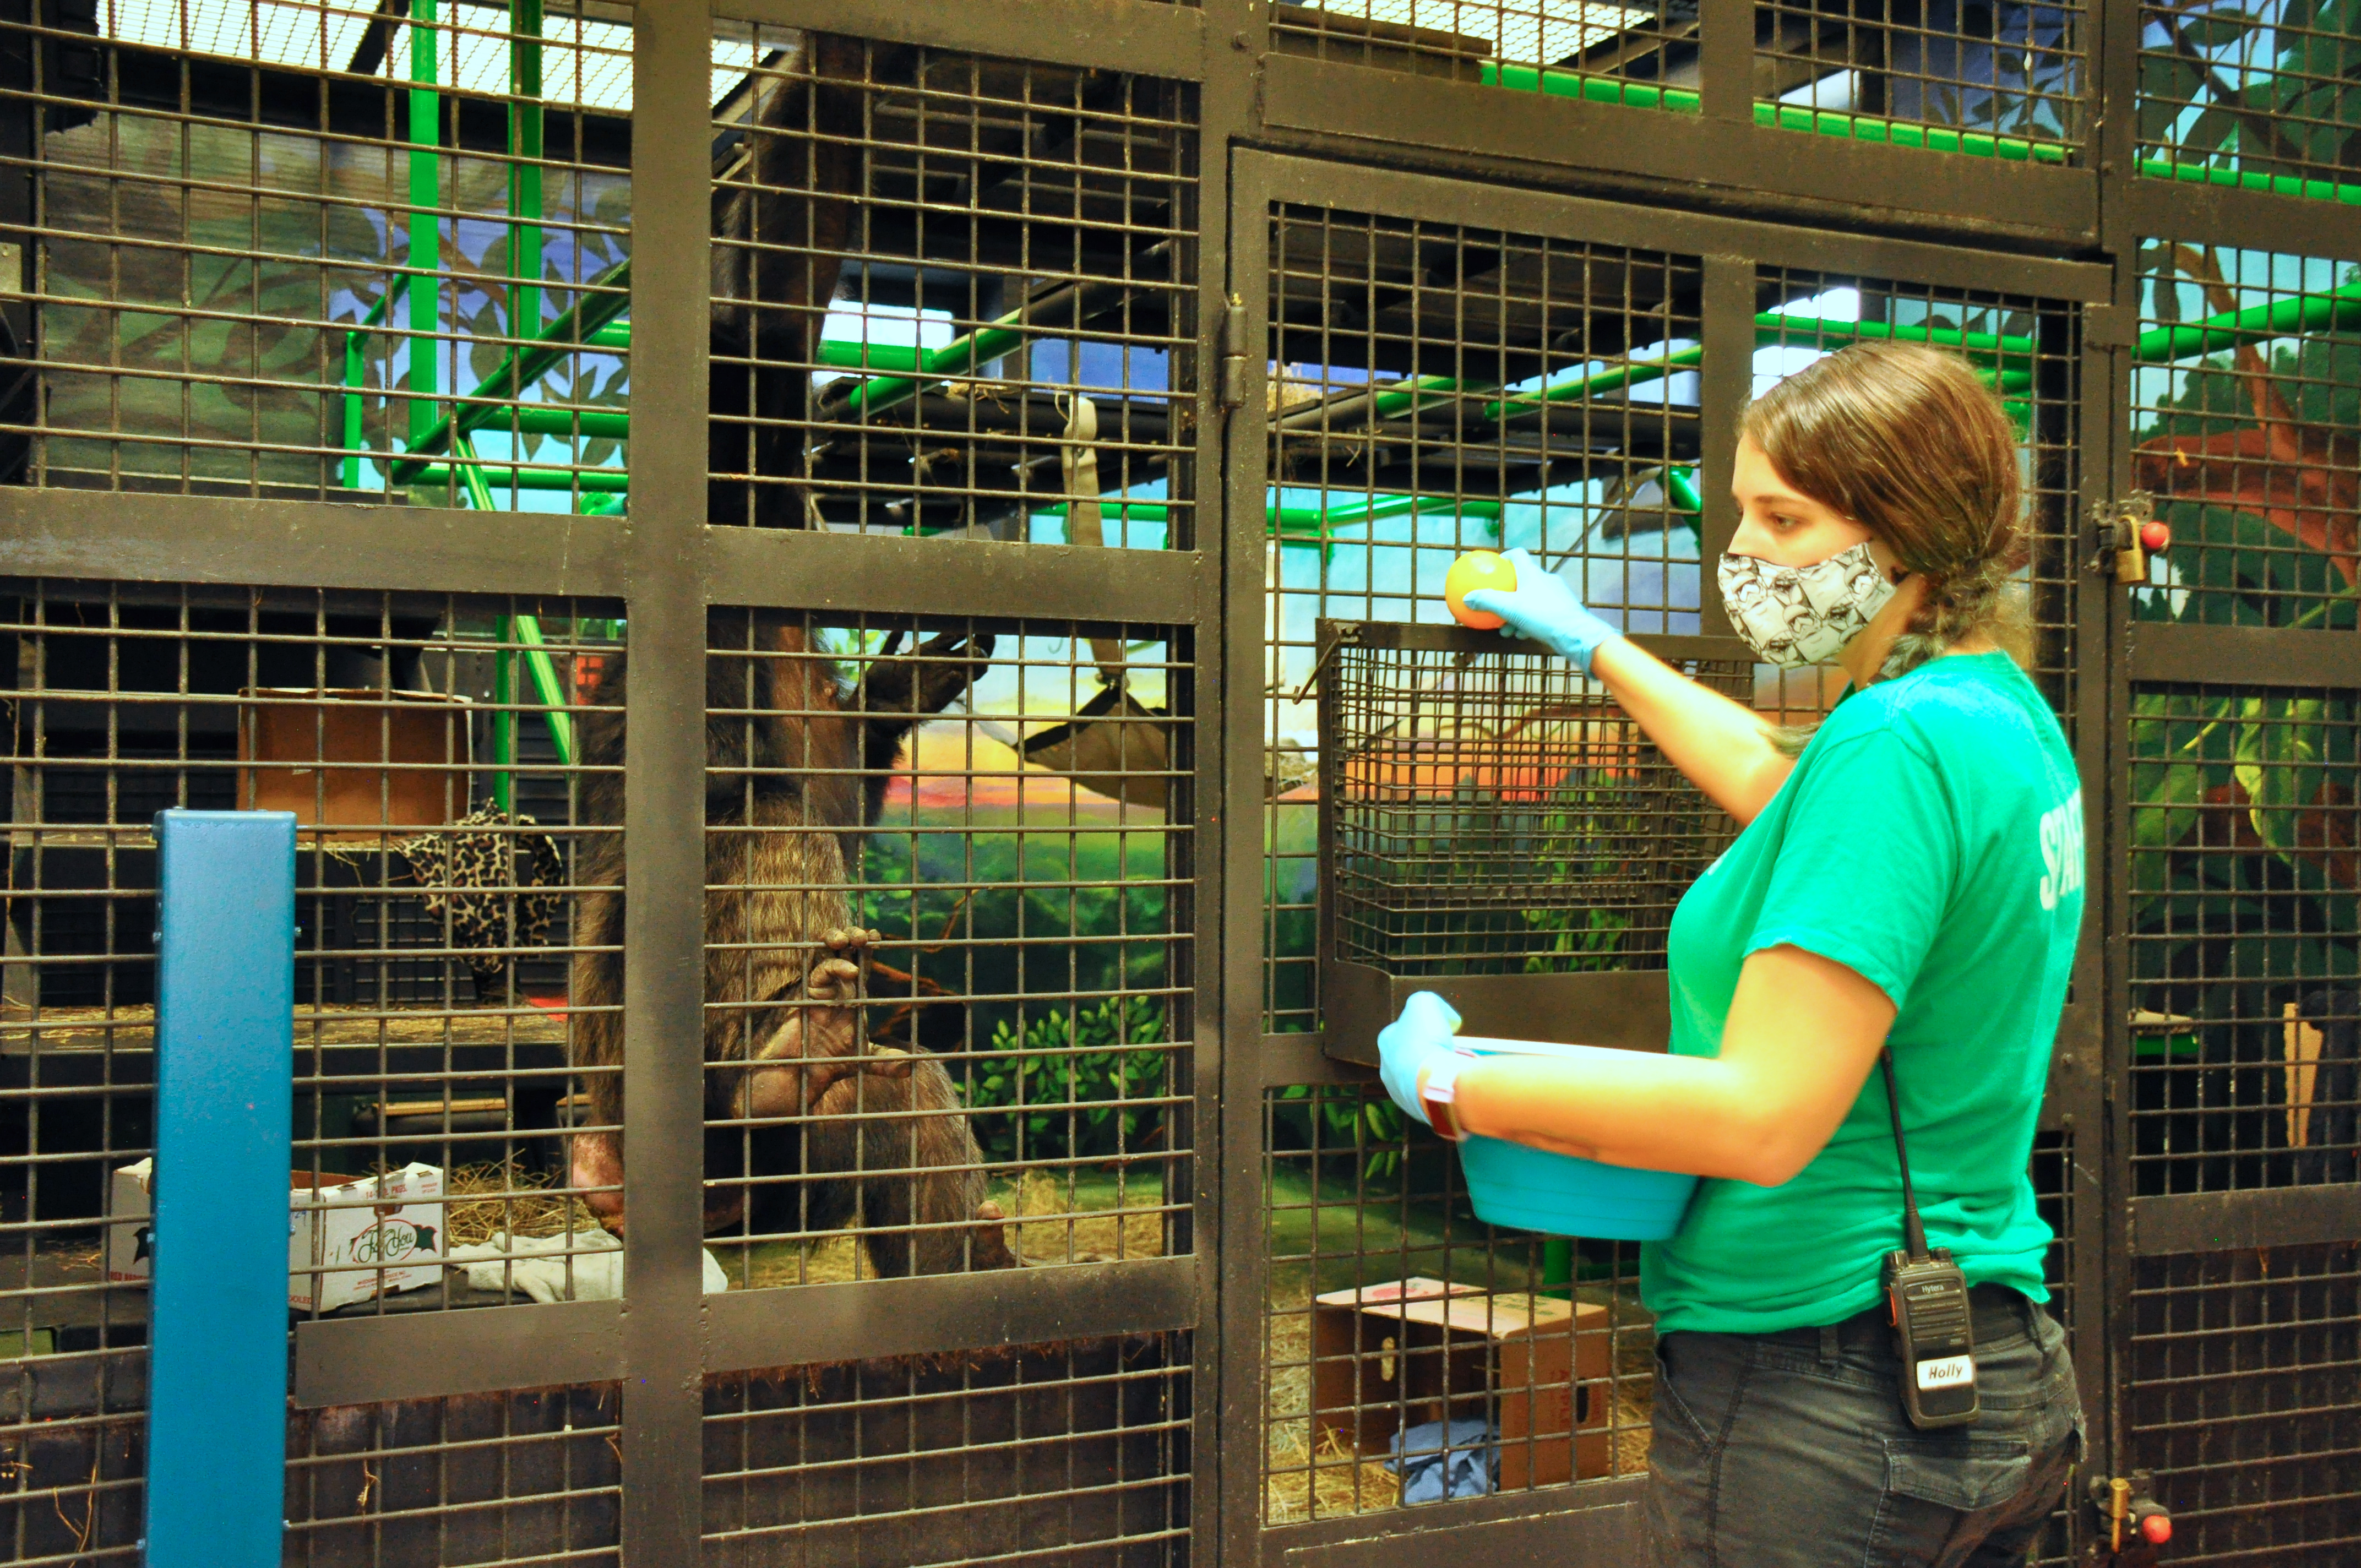 Holly feeding a chimp at a hopper.